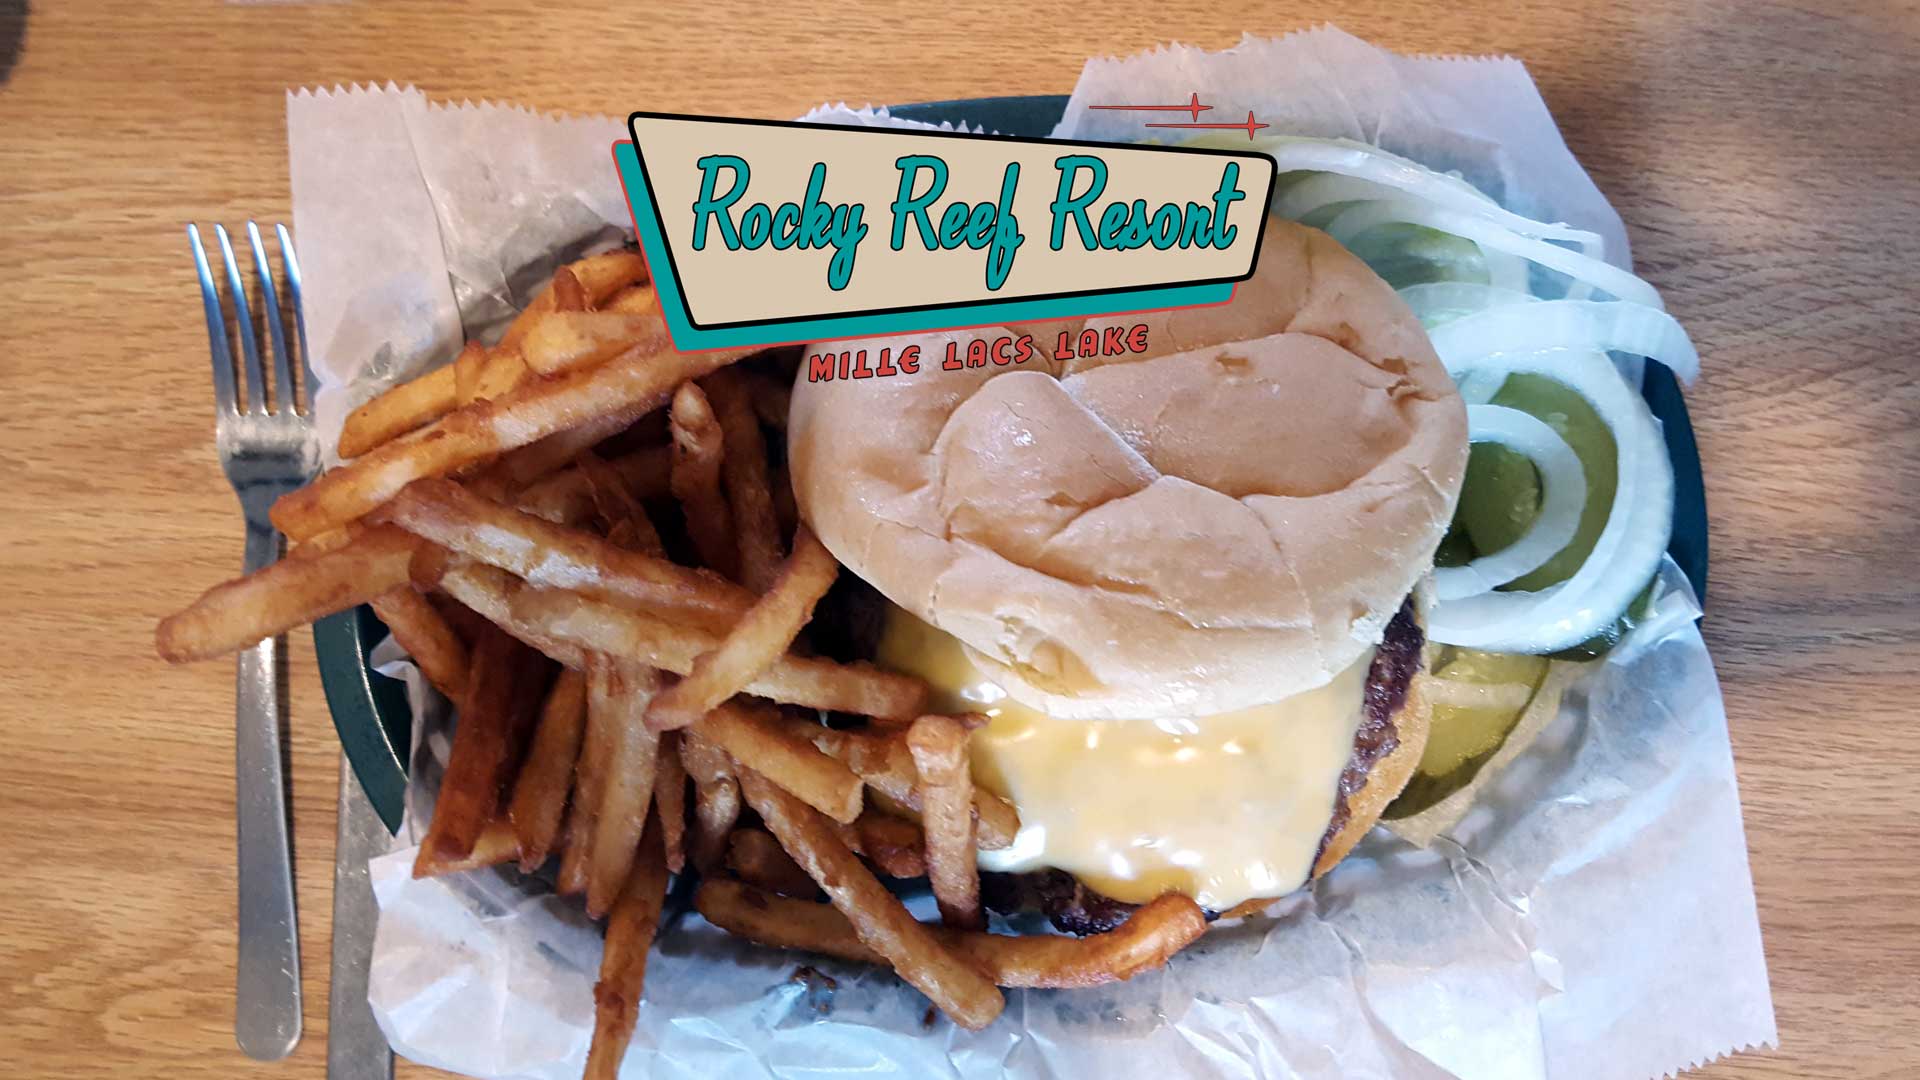 Homemade Hamburgers at Rocky Reef Resort - Rocky Reef Resort's Lakeside Bar & Grill on Mille Lacs Lake in Onamia, Minnesota